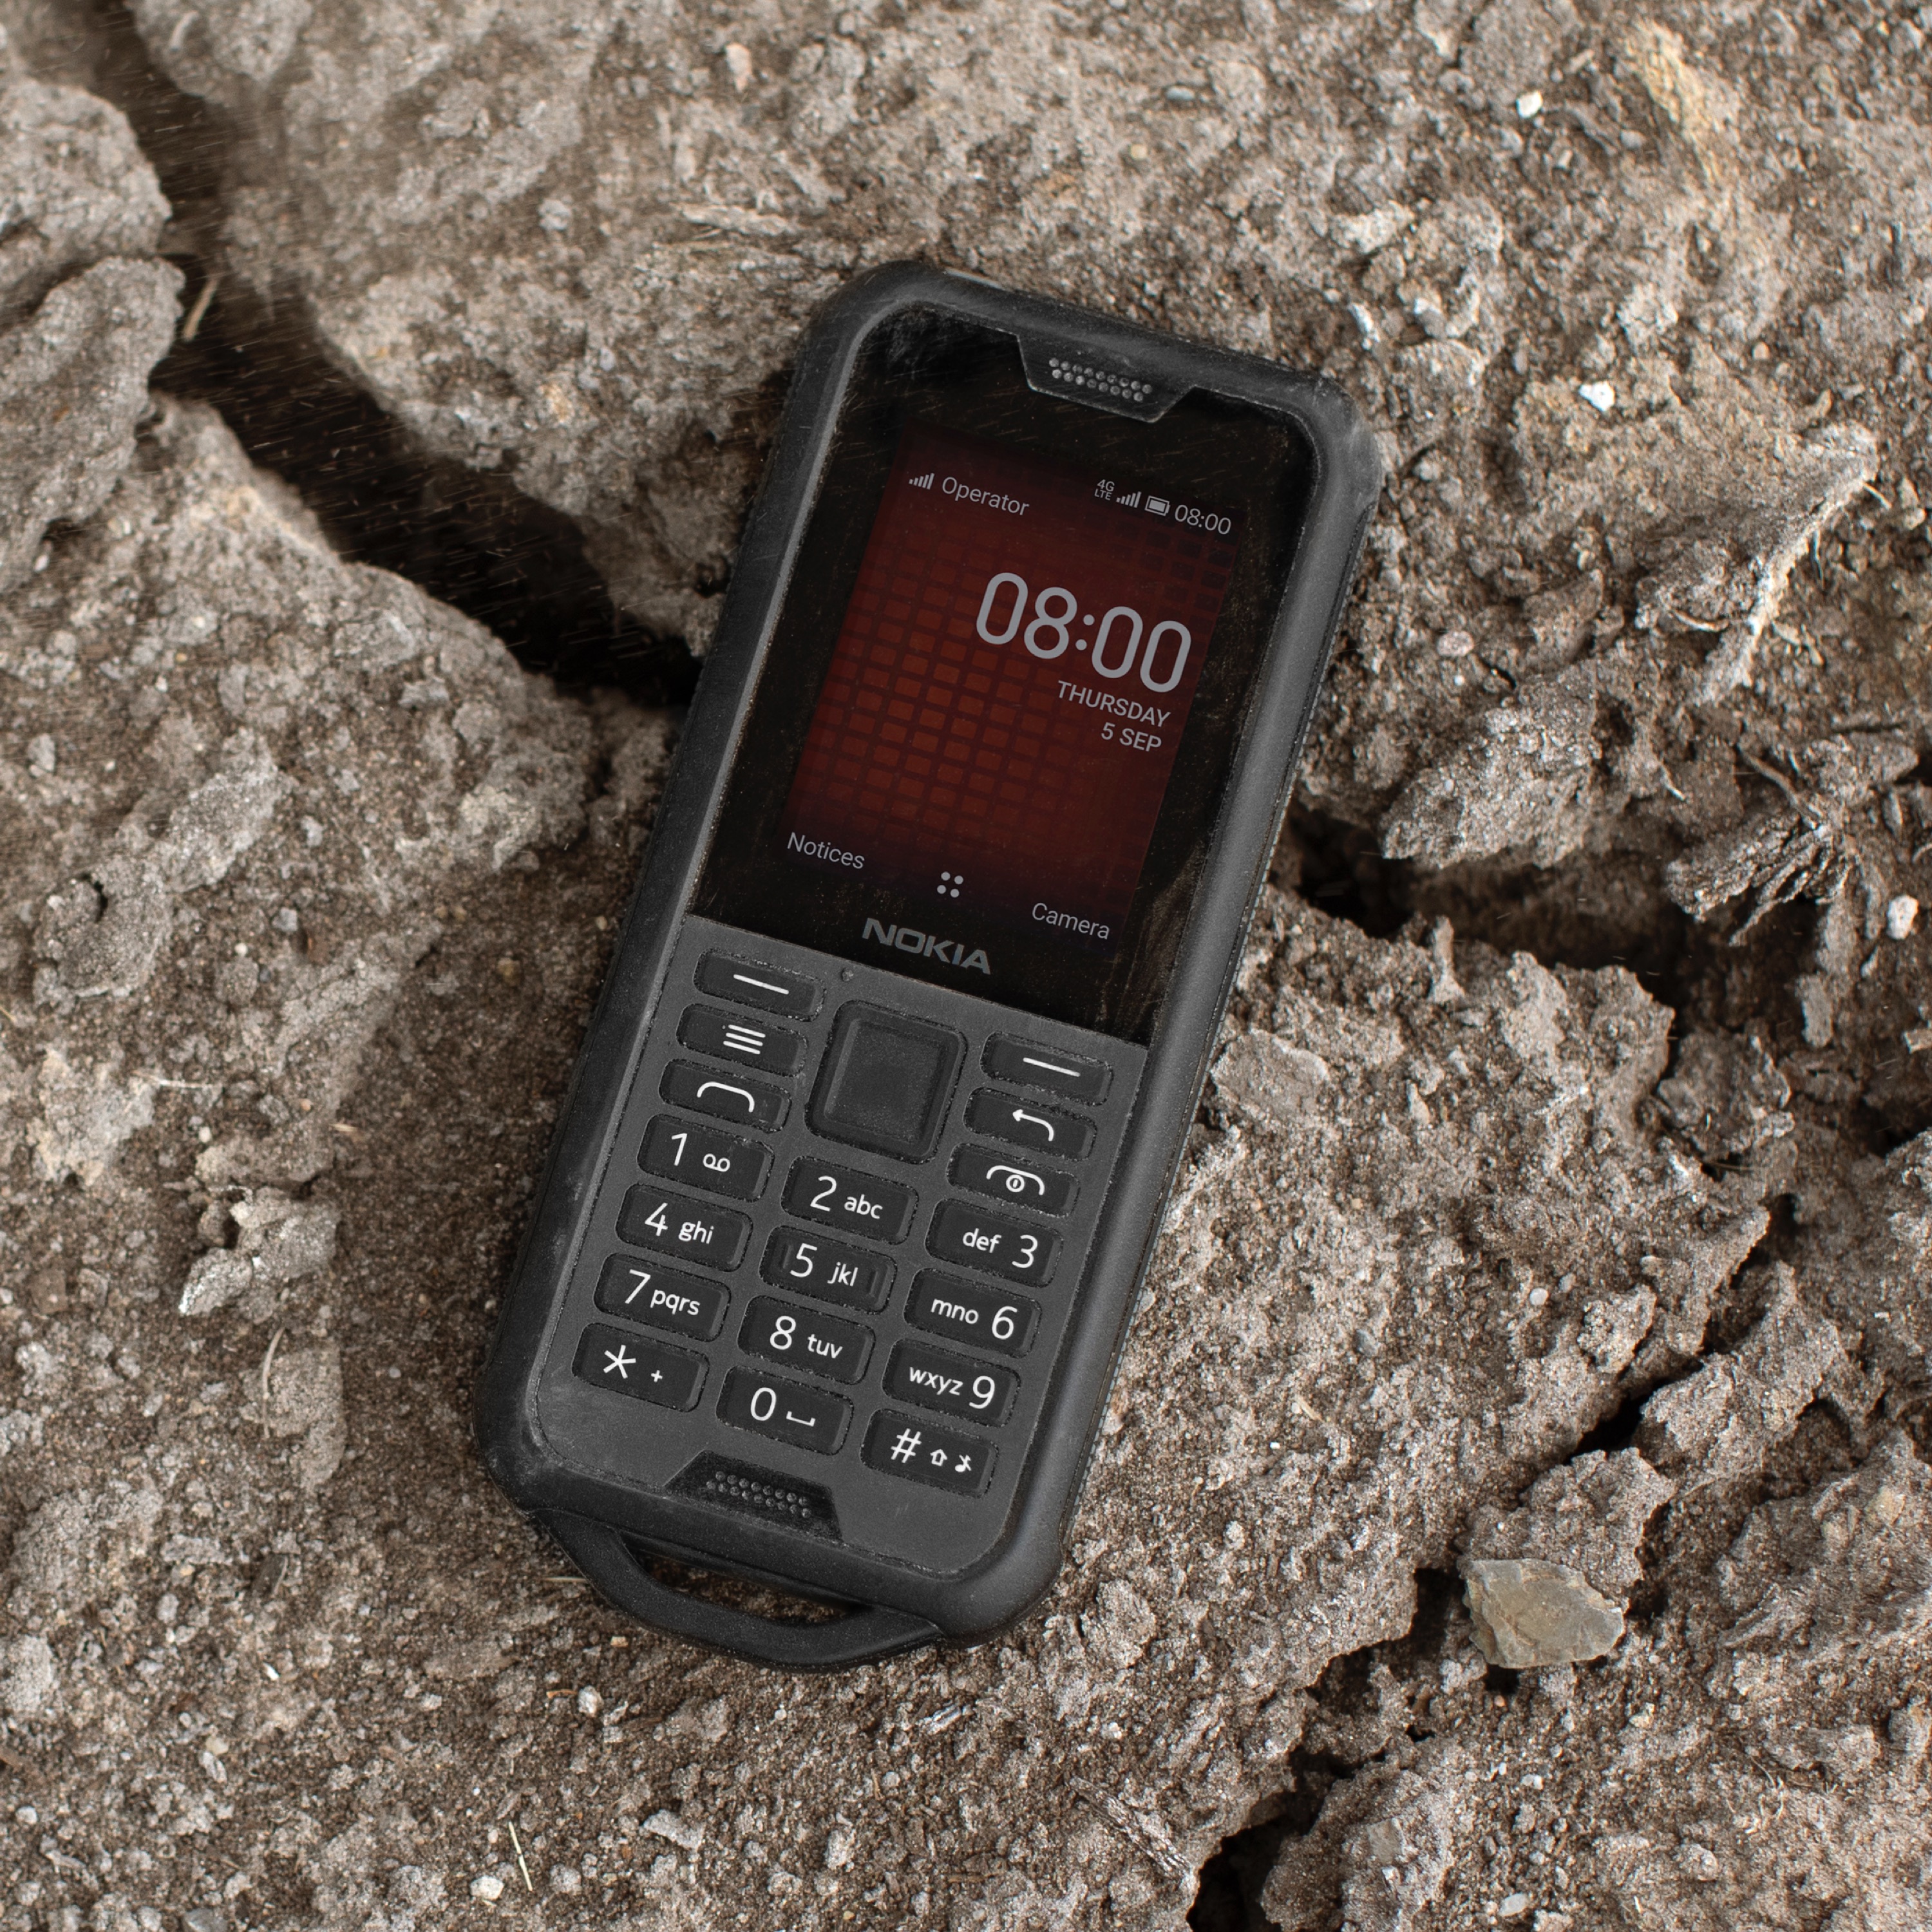 Nokia 800 Tough 123 photo, specs, and price - Engadget